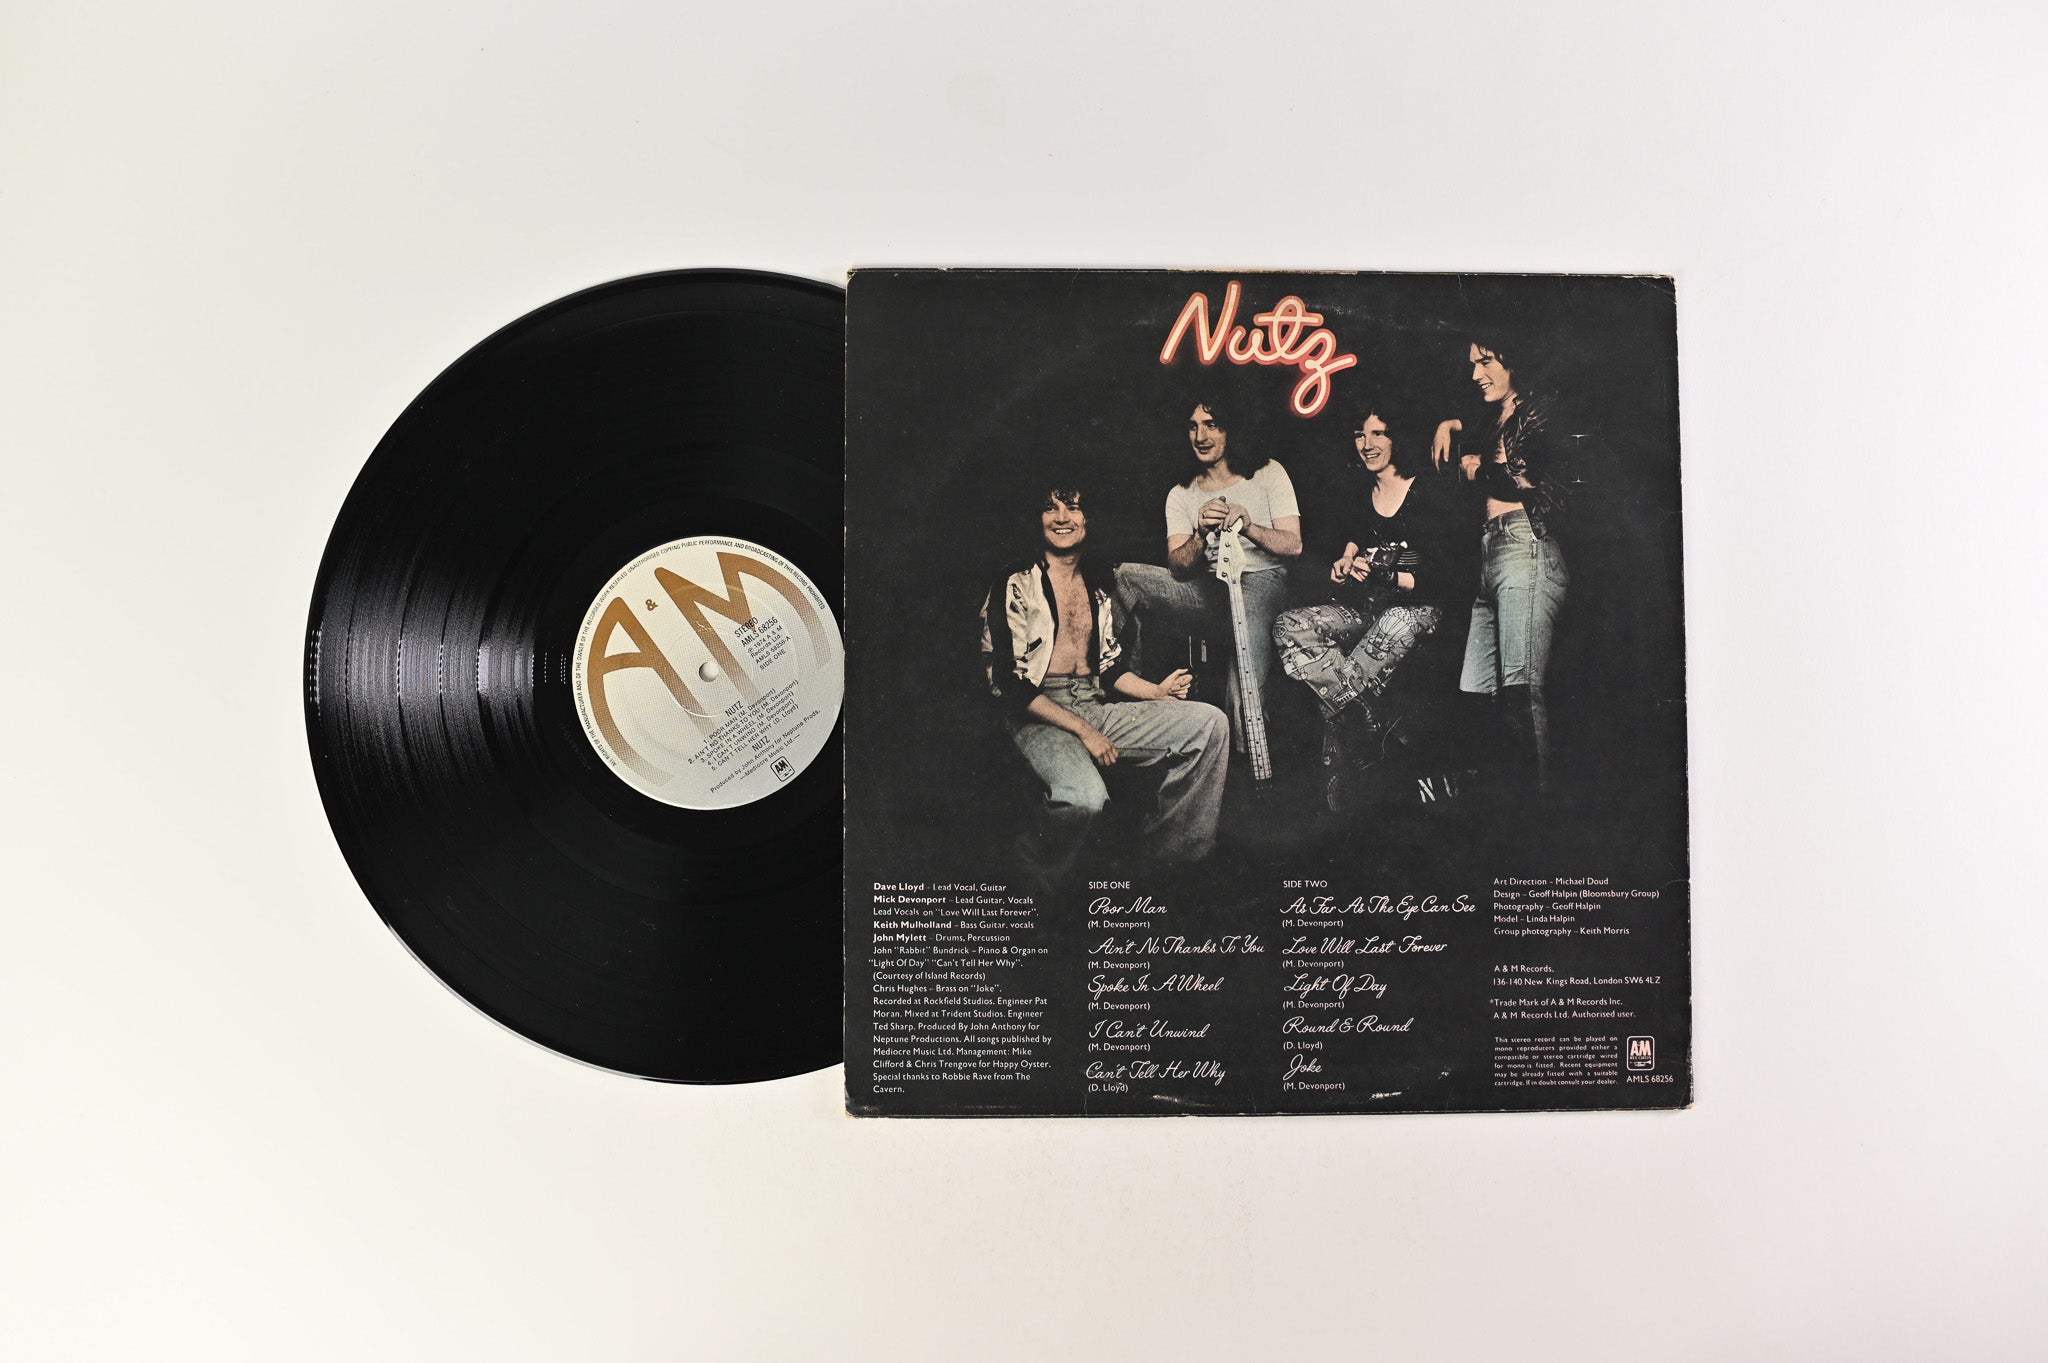 Nutz - Nutz on A&M Records - UK pressing